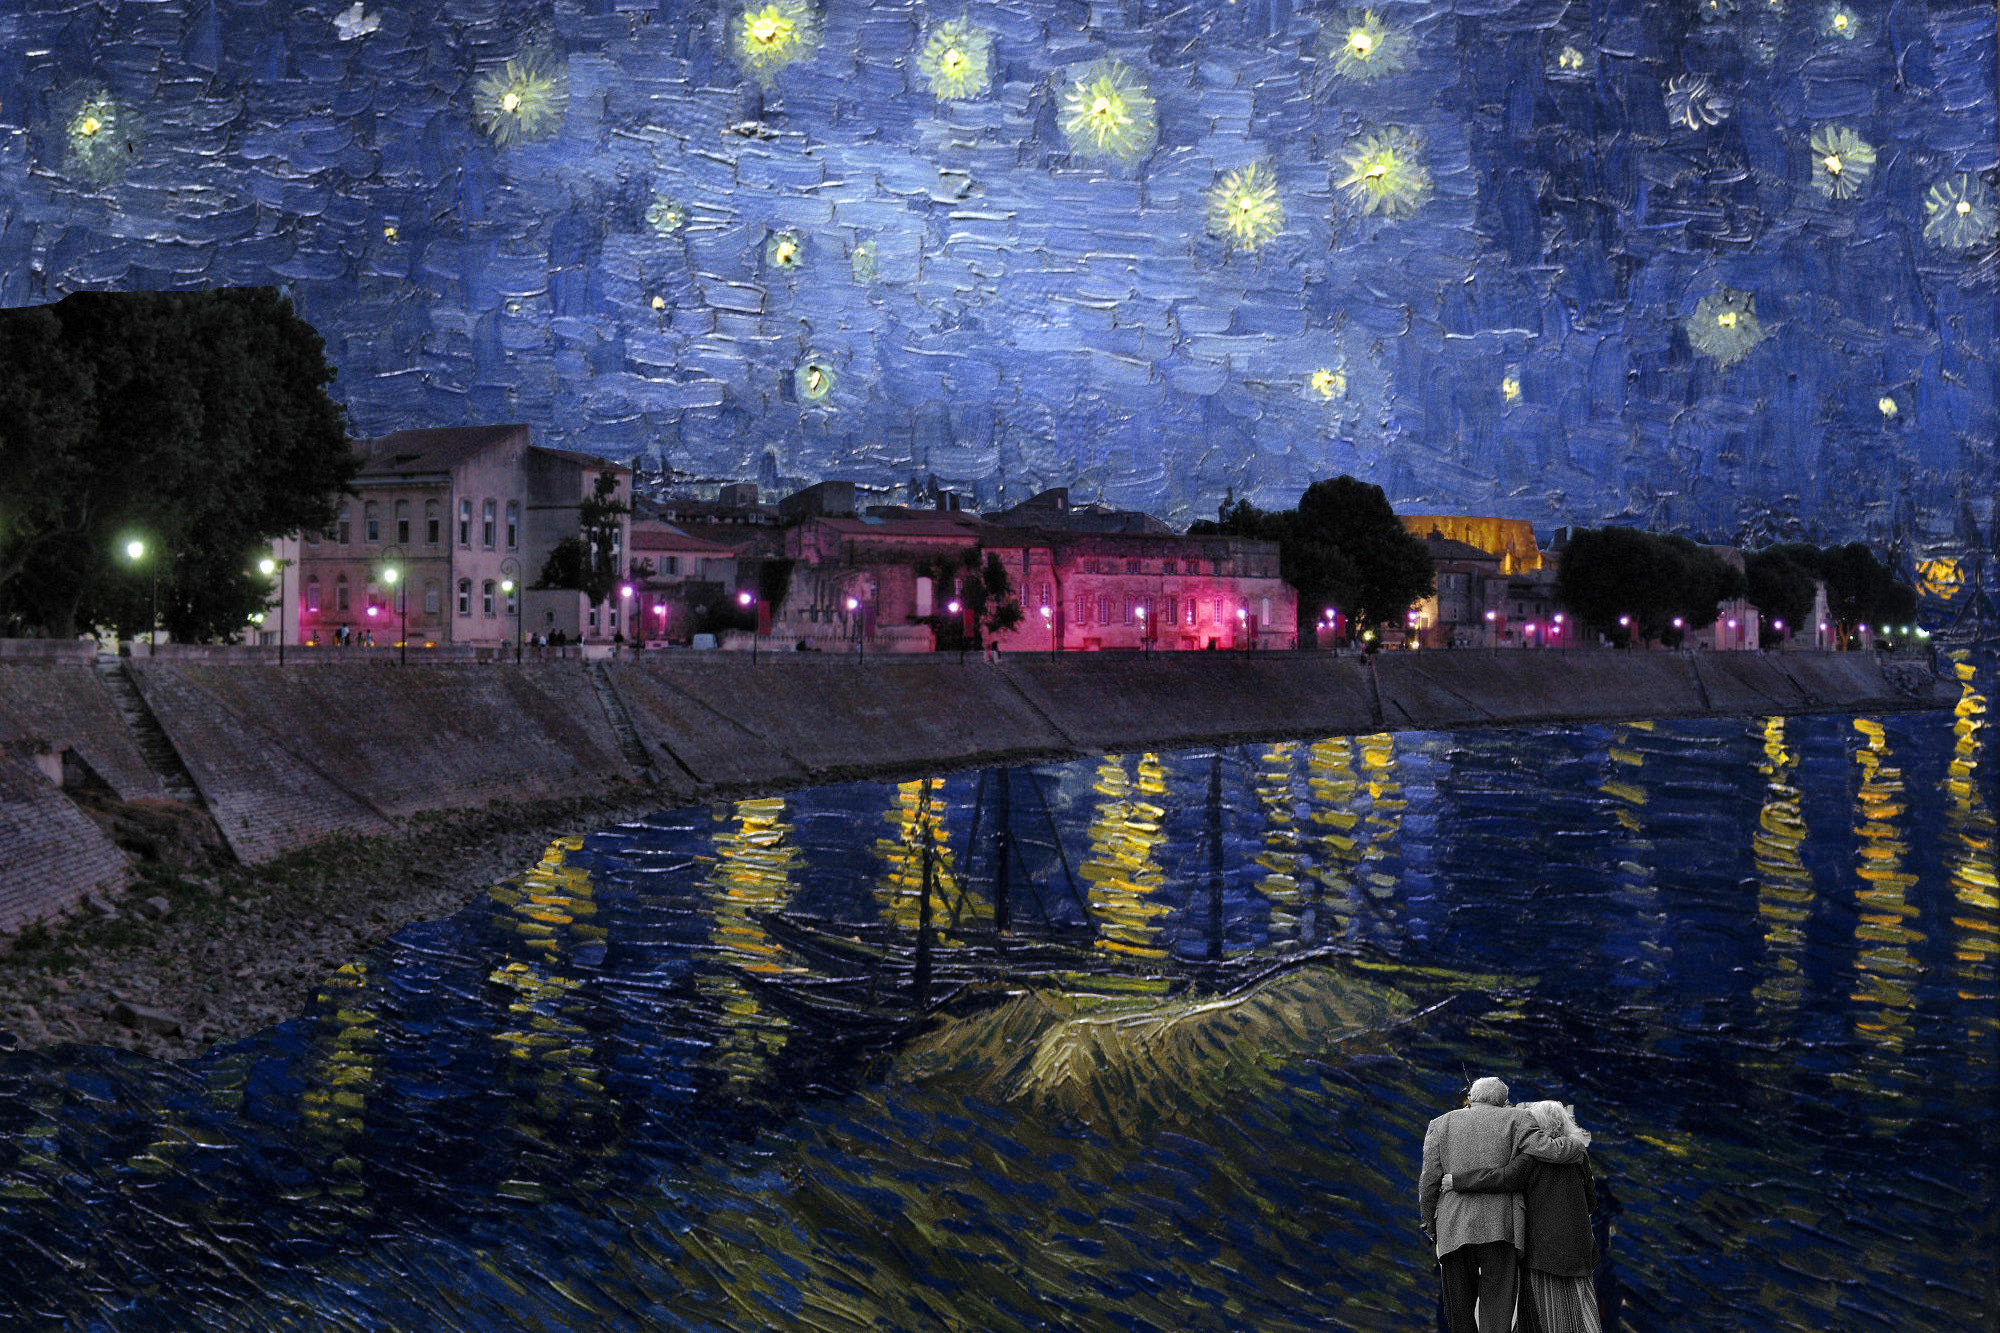 2000x1333 Starry Night Over The Rhone Van Gogh Original. All ...